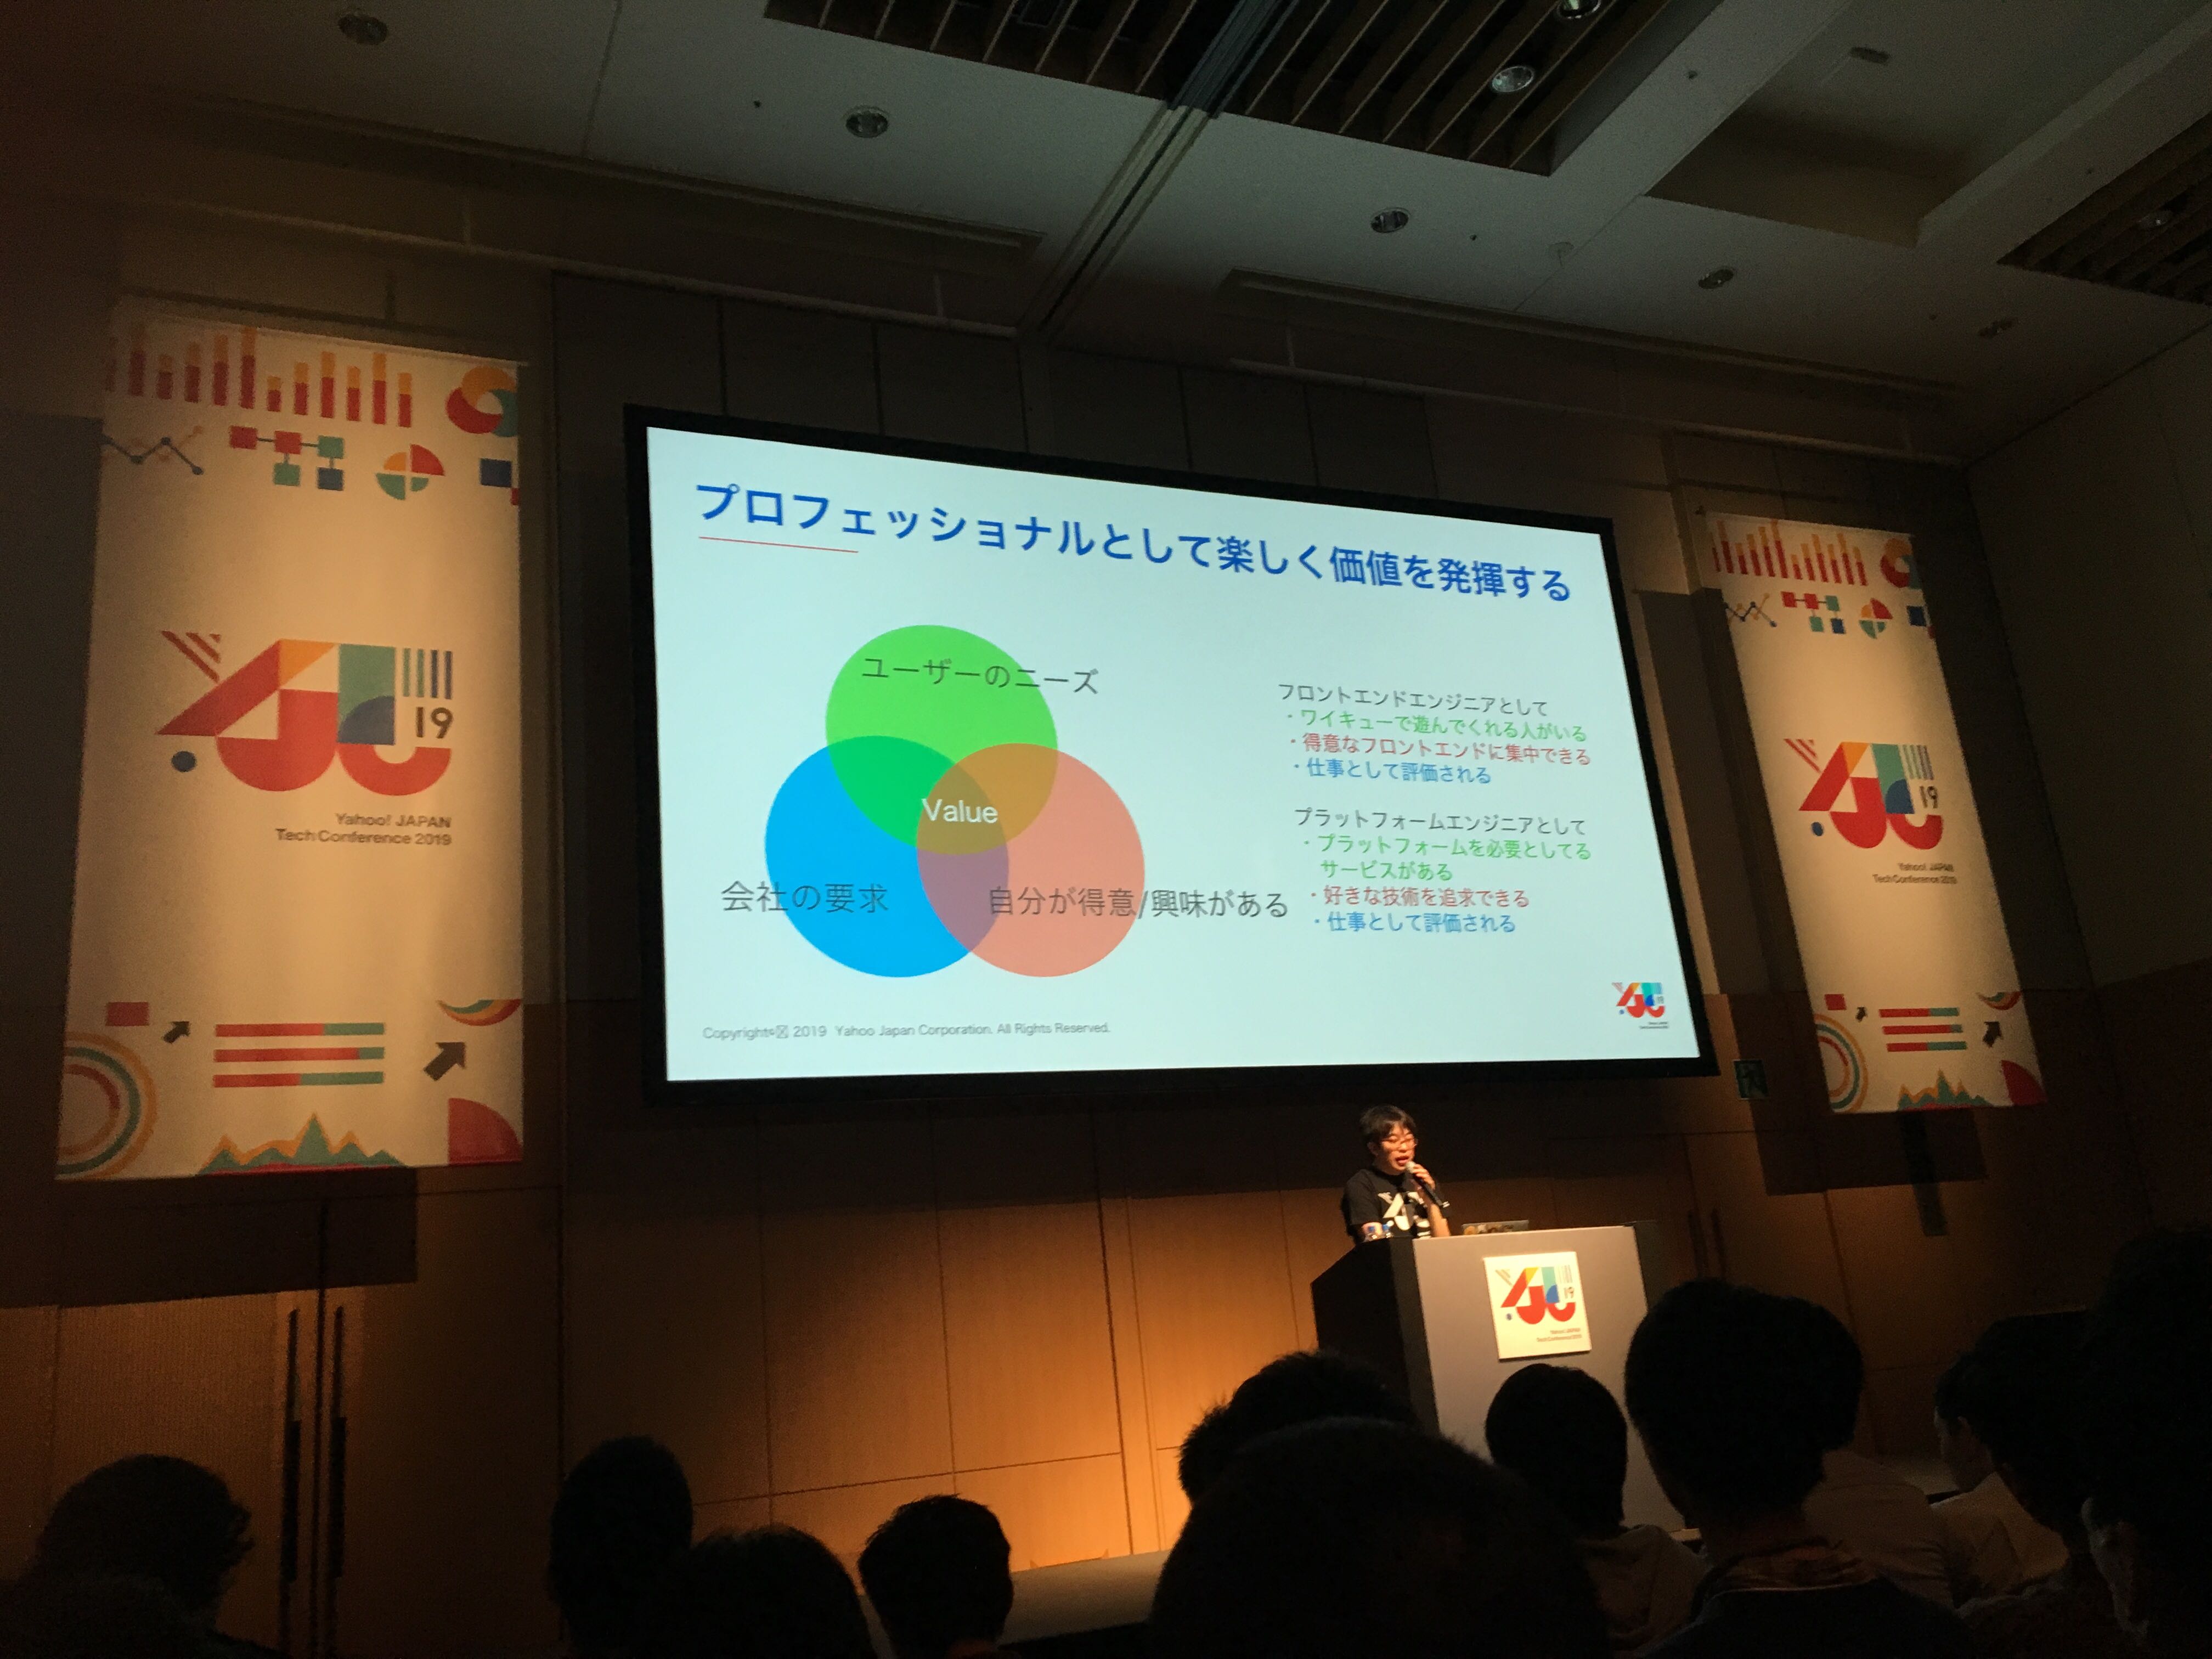 Yahoo! JAPAN tech Conference 2019